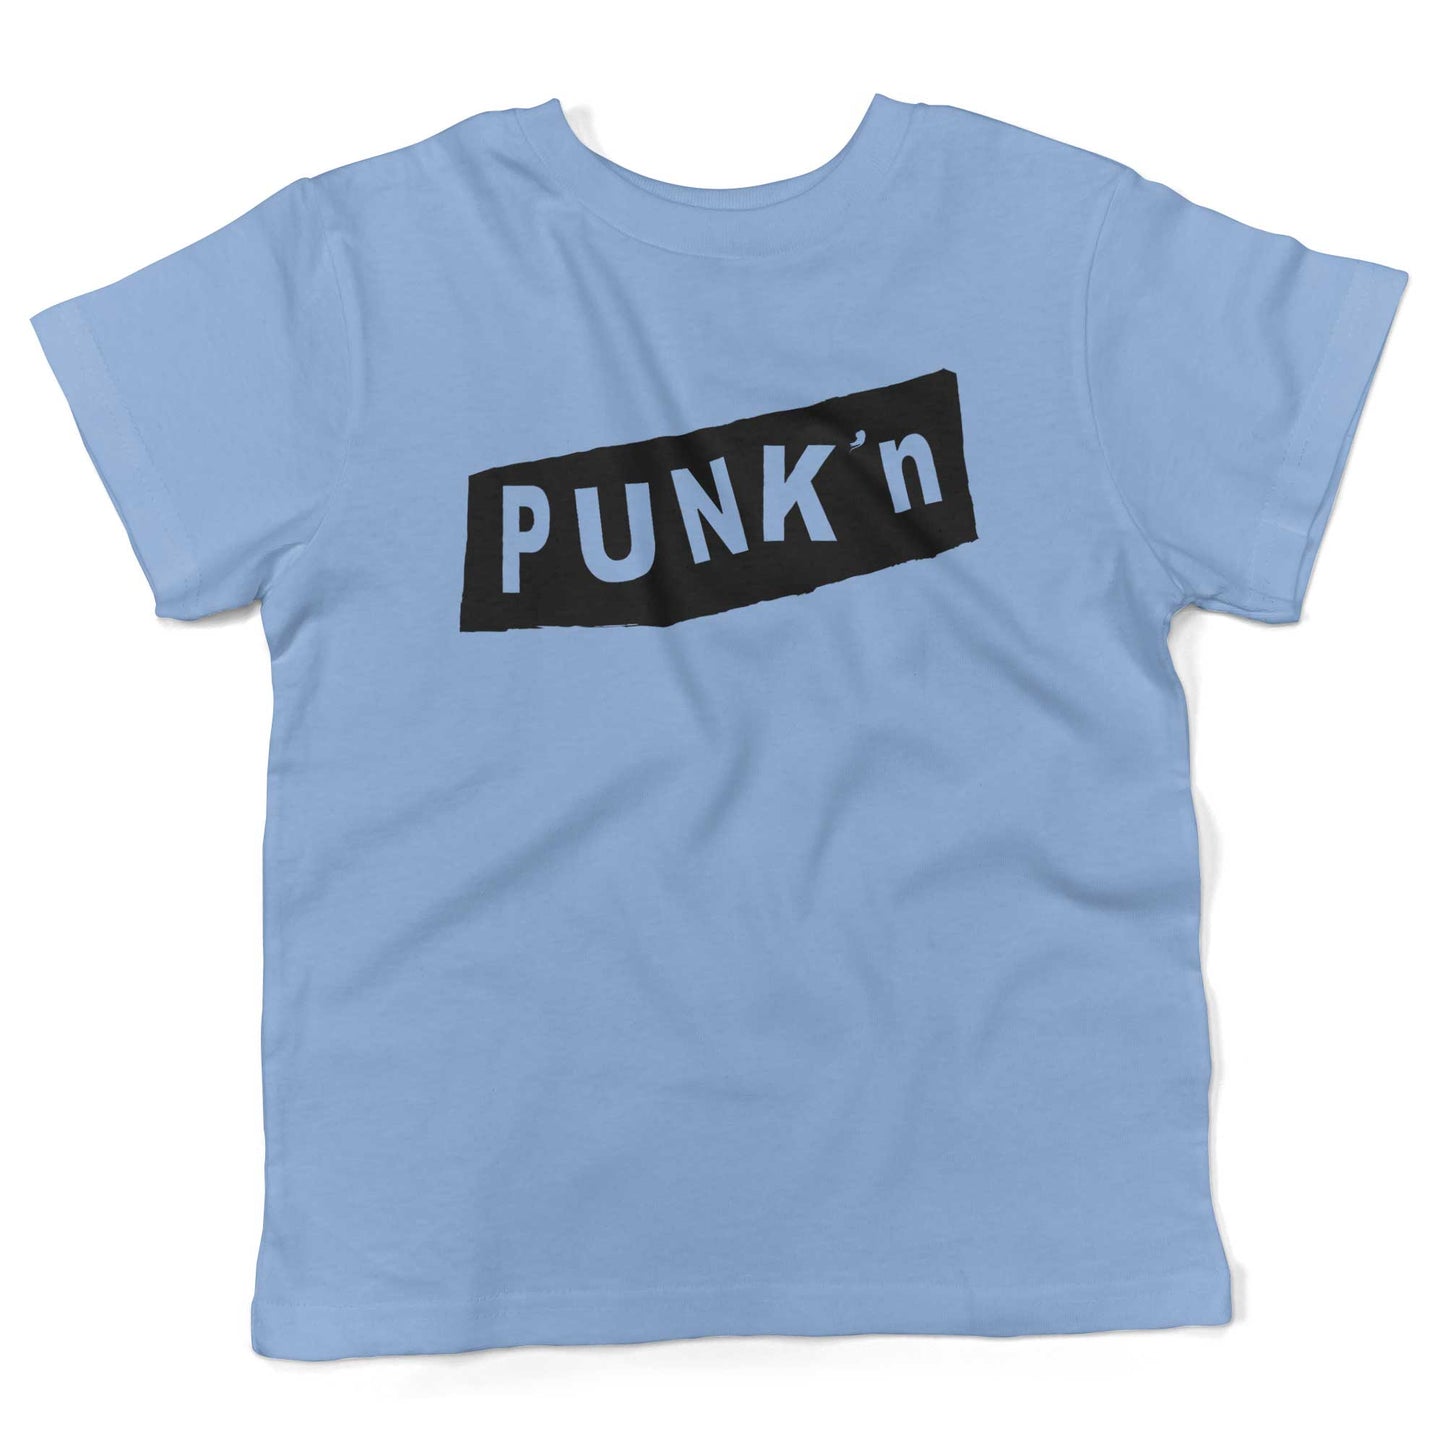 Pumpkin Punk'n Toddler Shirt-Organic Baby Blue-2T